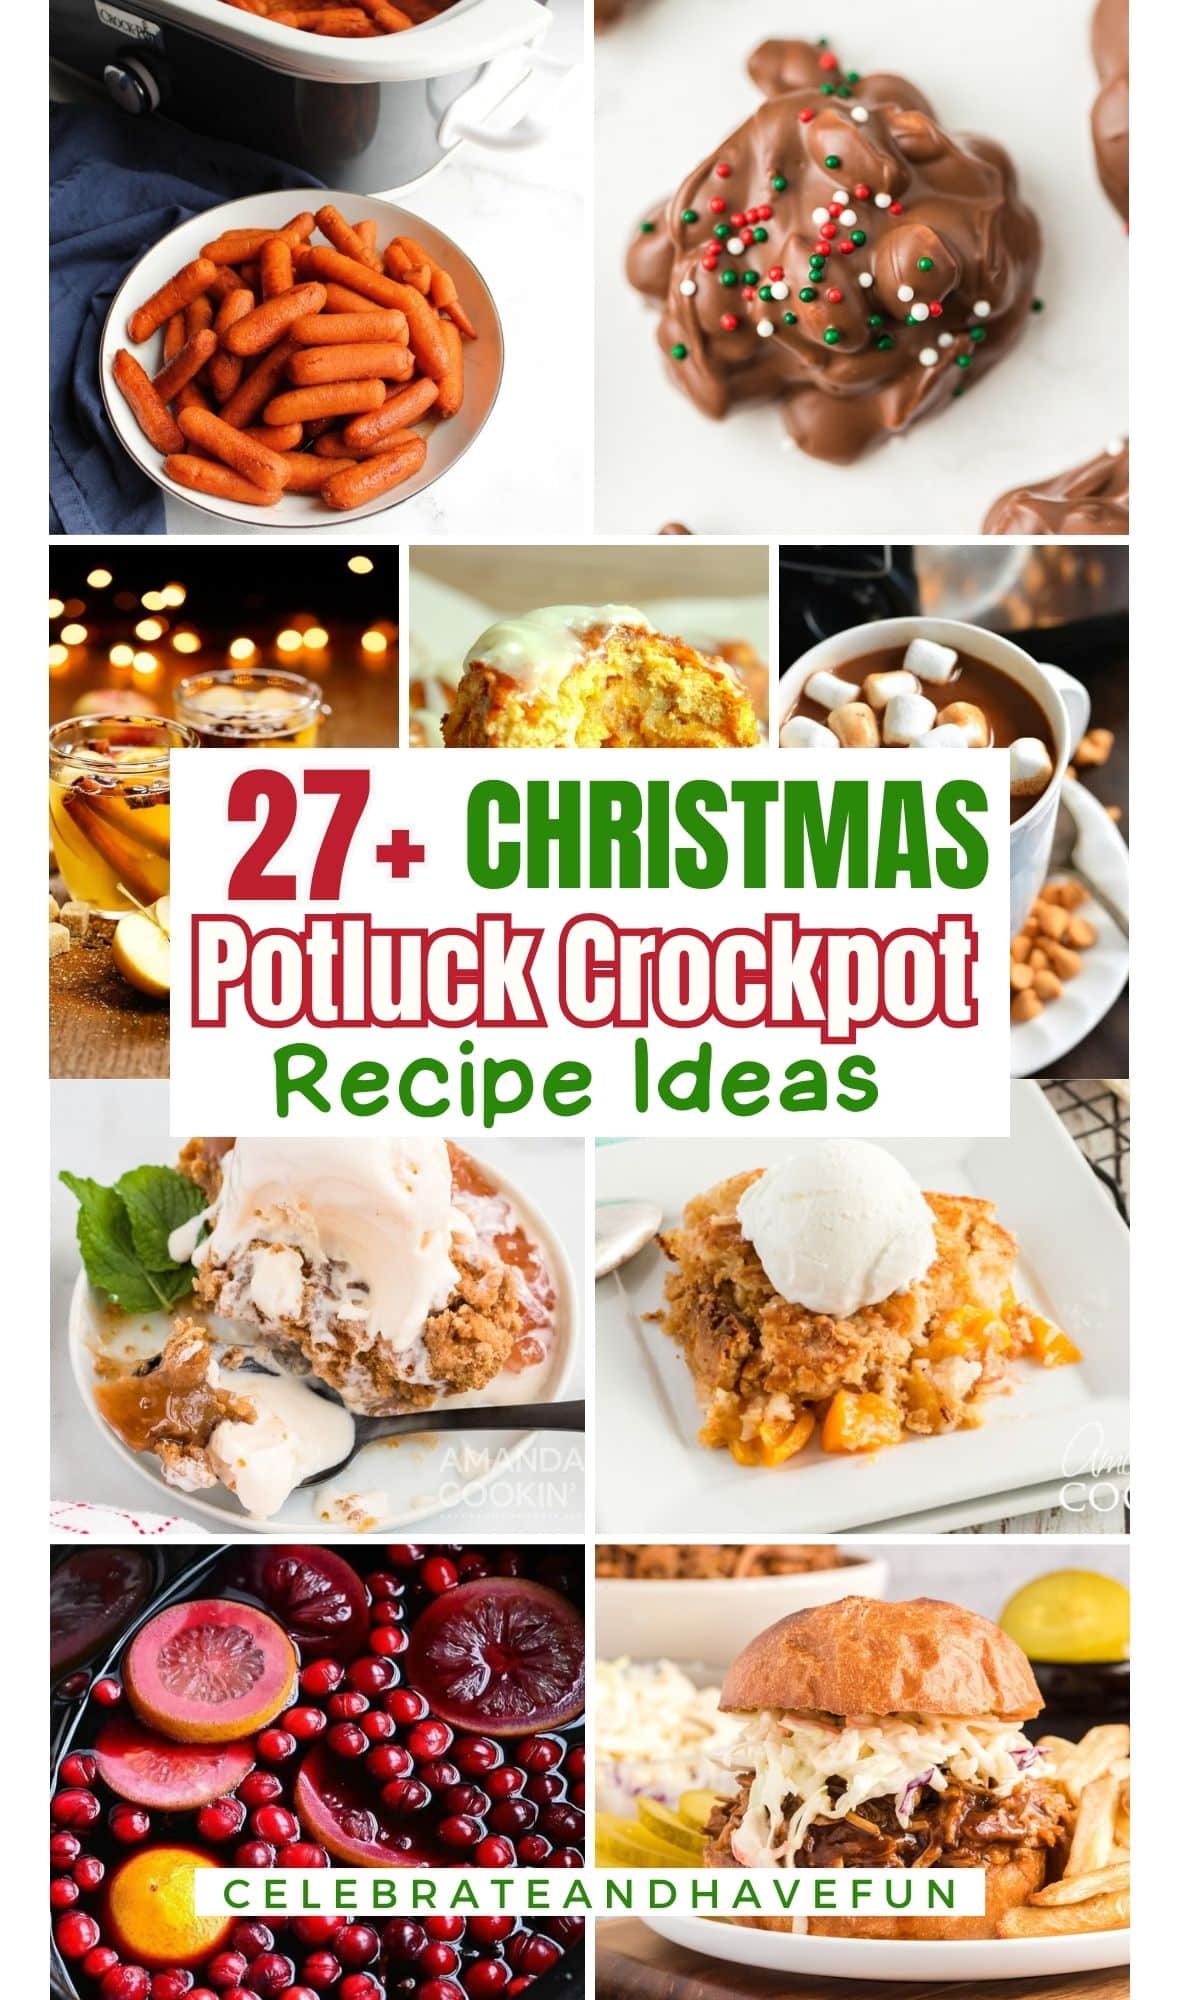 27+ Christmas Potluck Crockpot Recipe Ideas